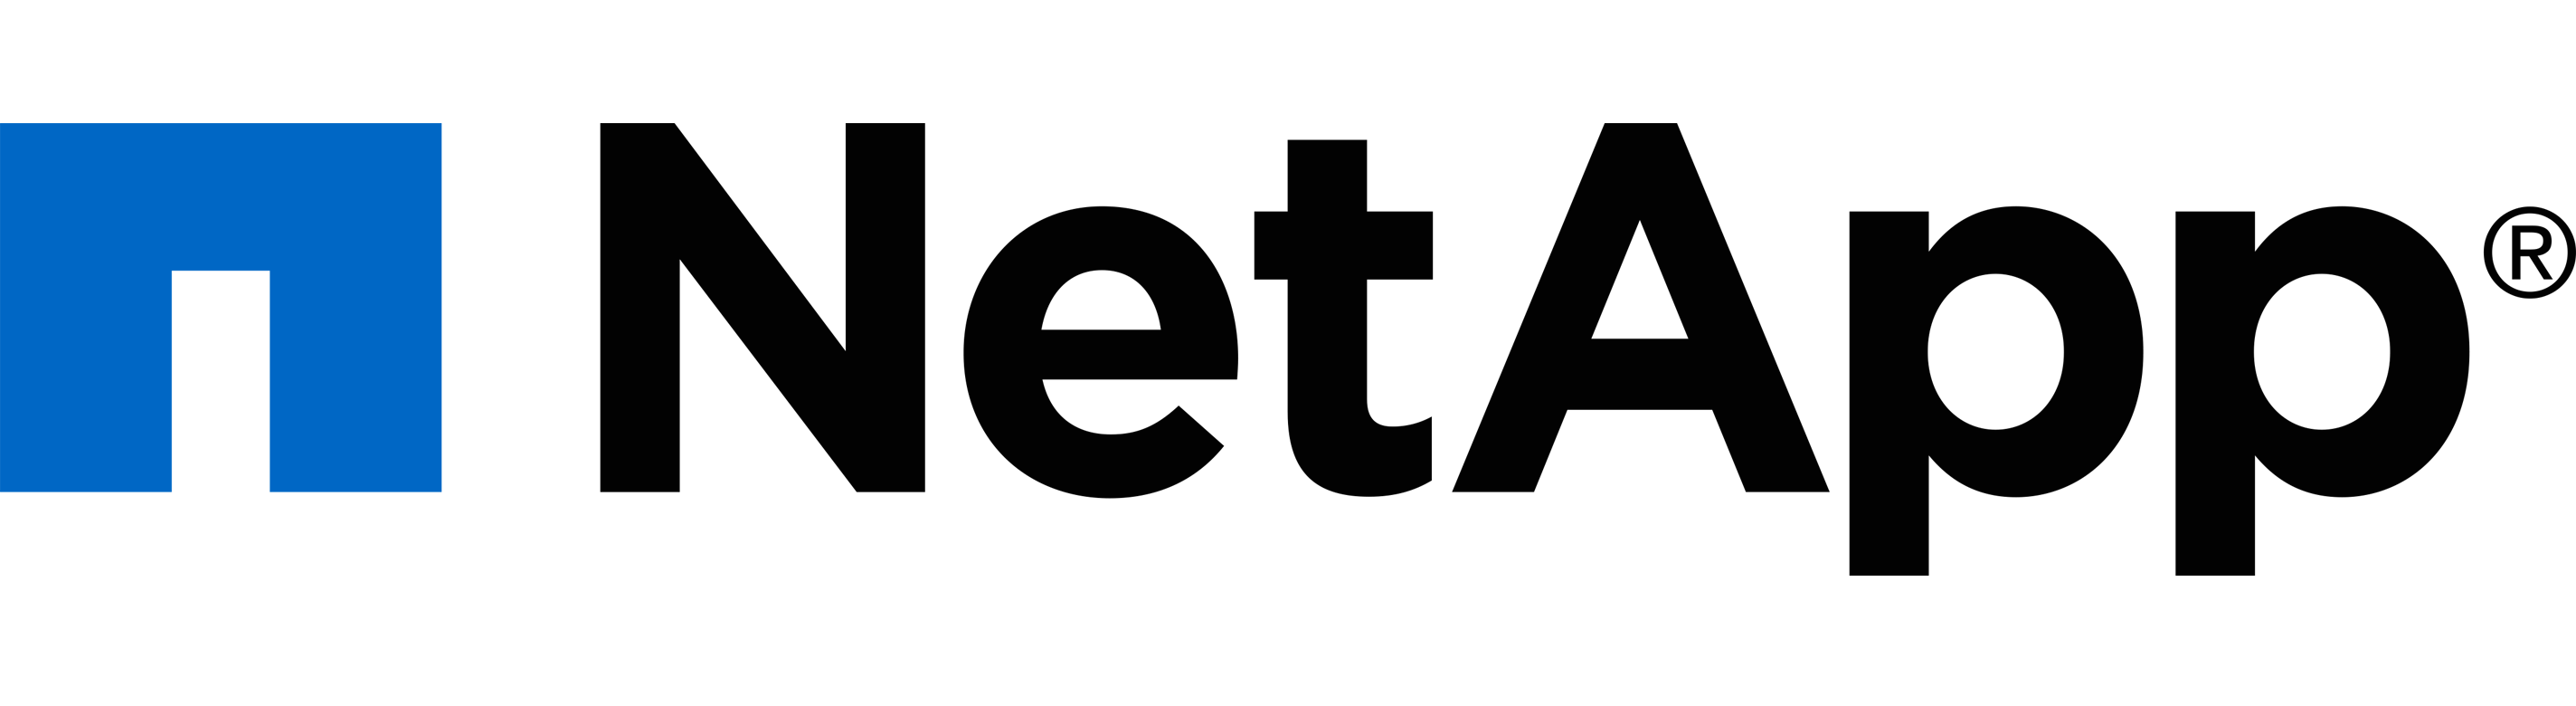 Data Backup Service - Partner Logo 3